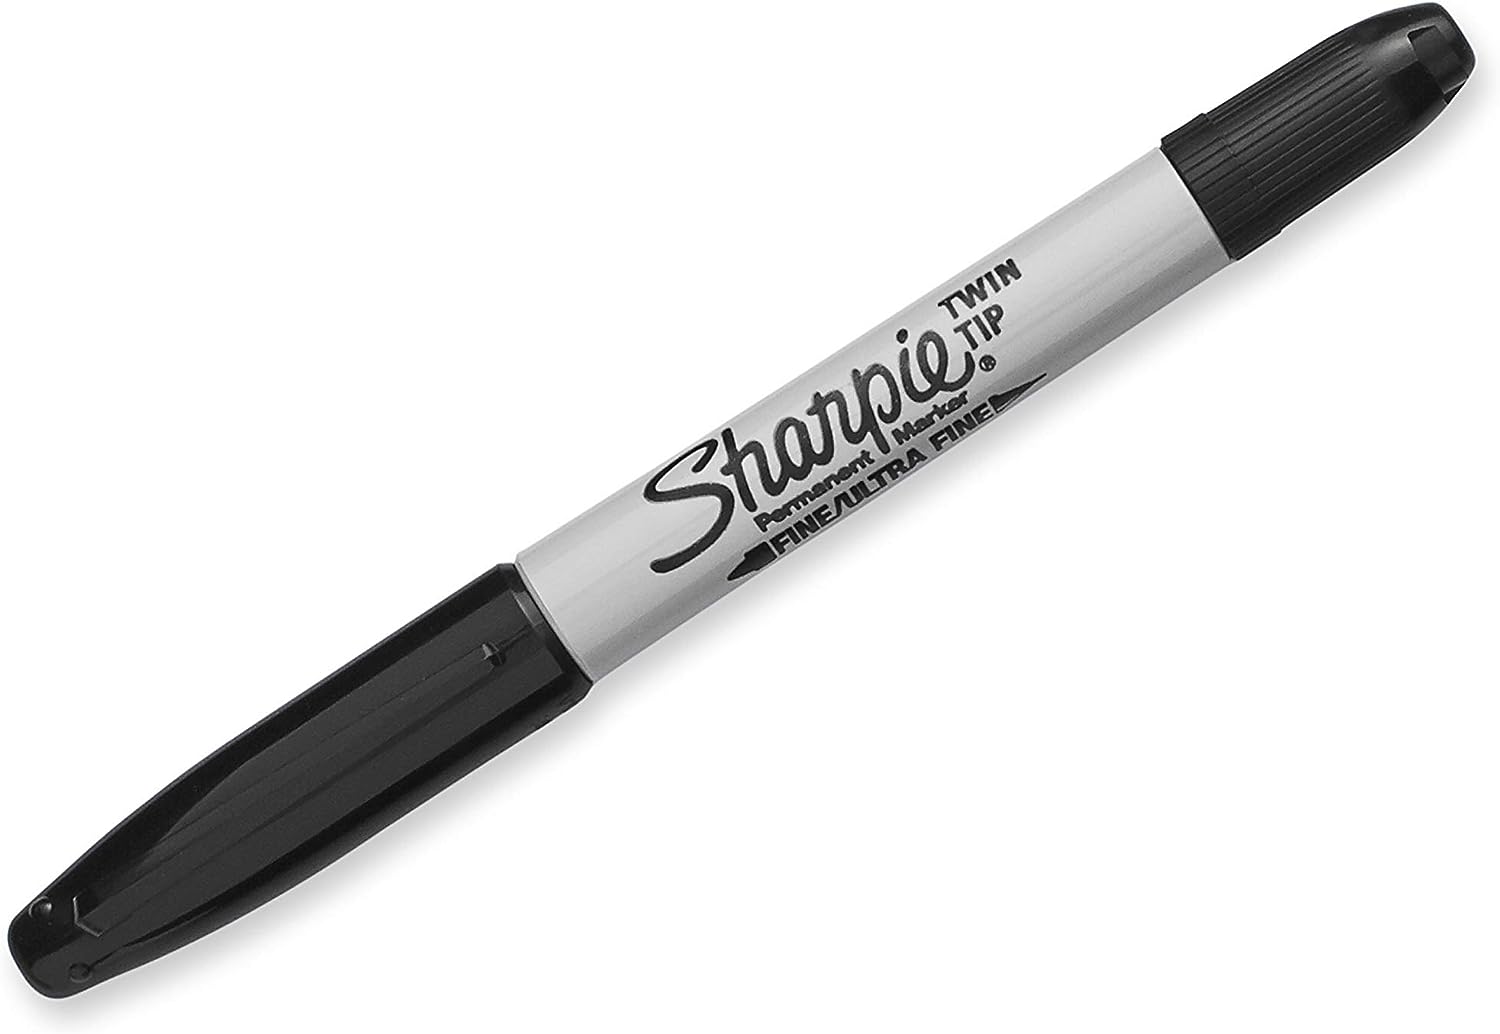 Sharpie - Black permanent marker - Twin-tip - Fine & Ultra Fine - Carded